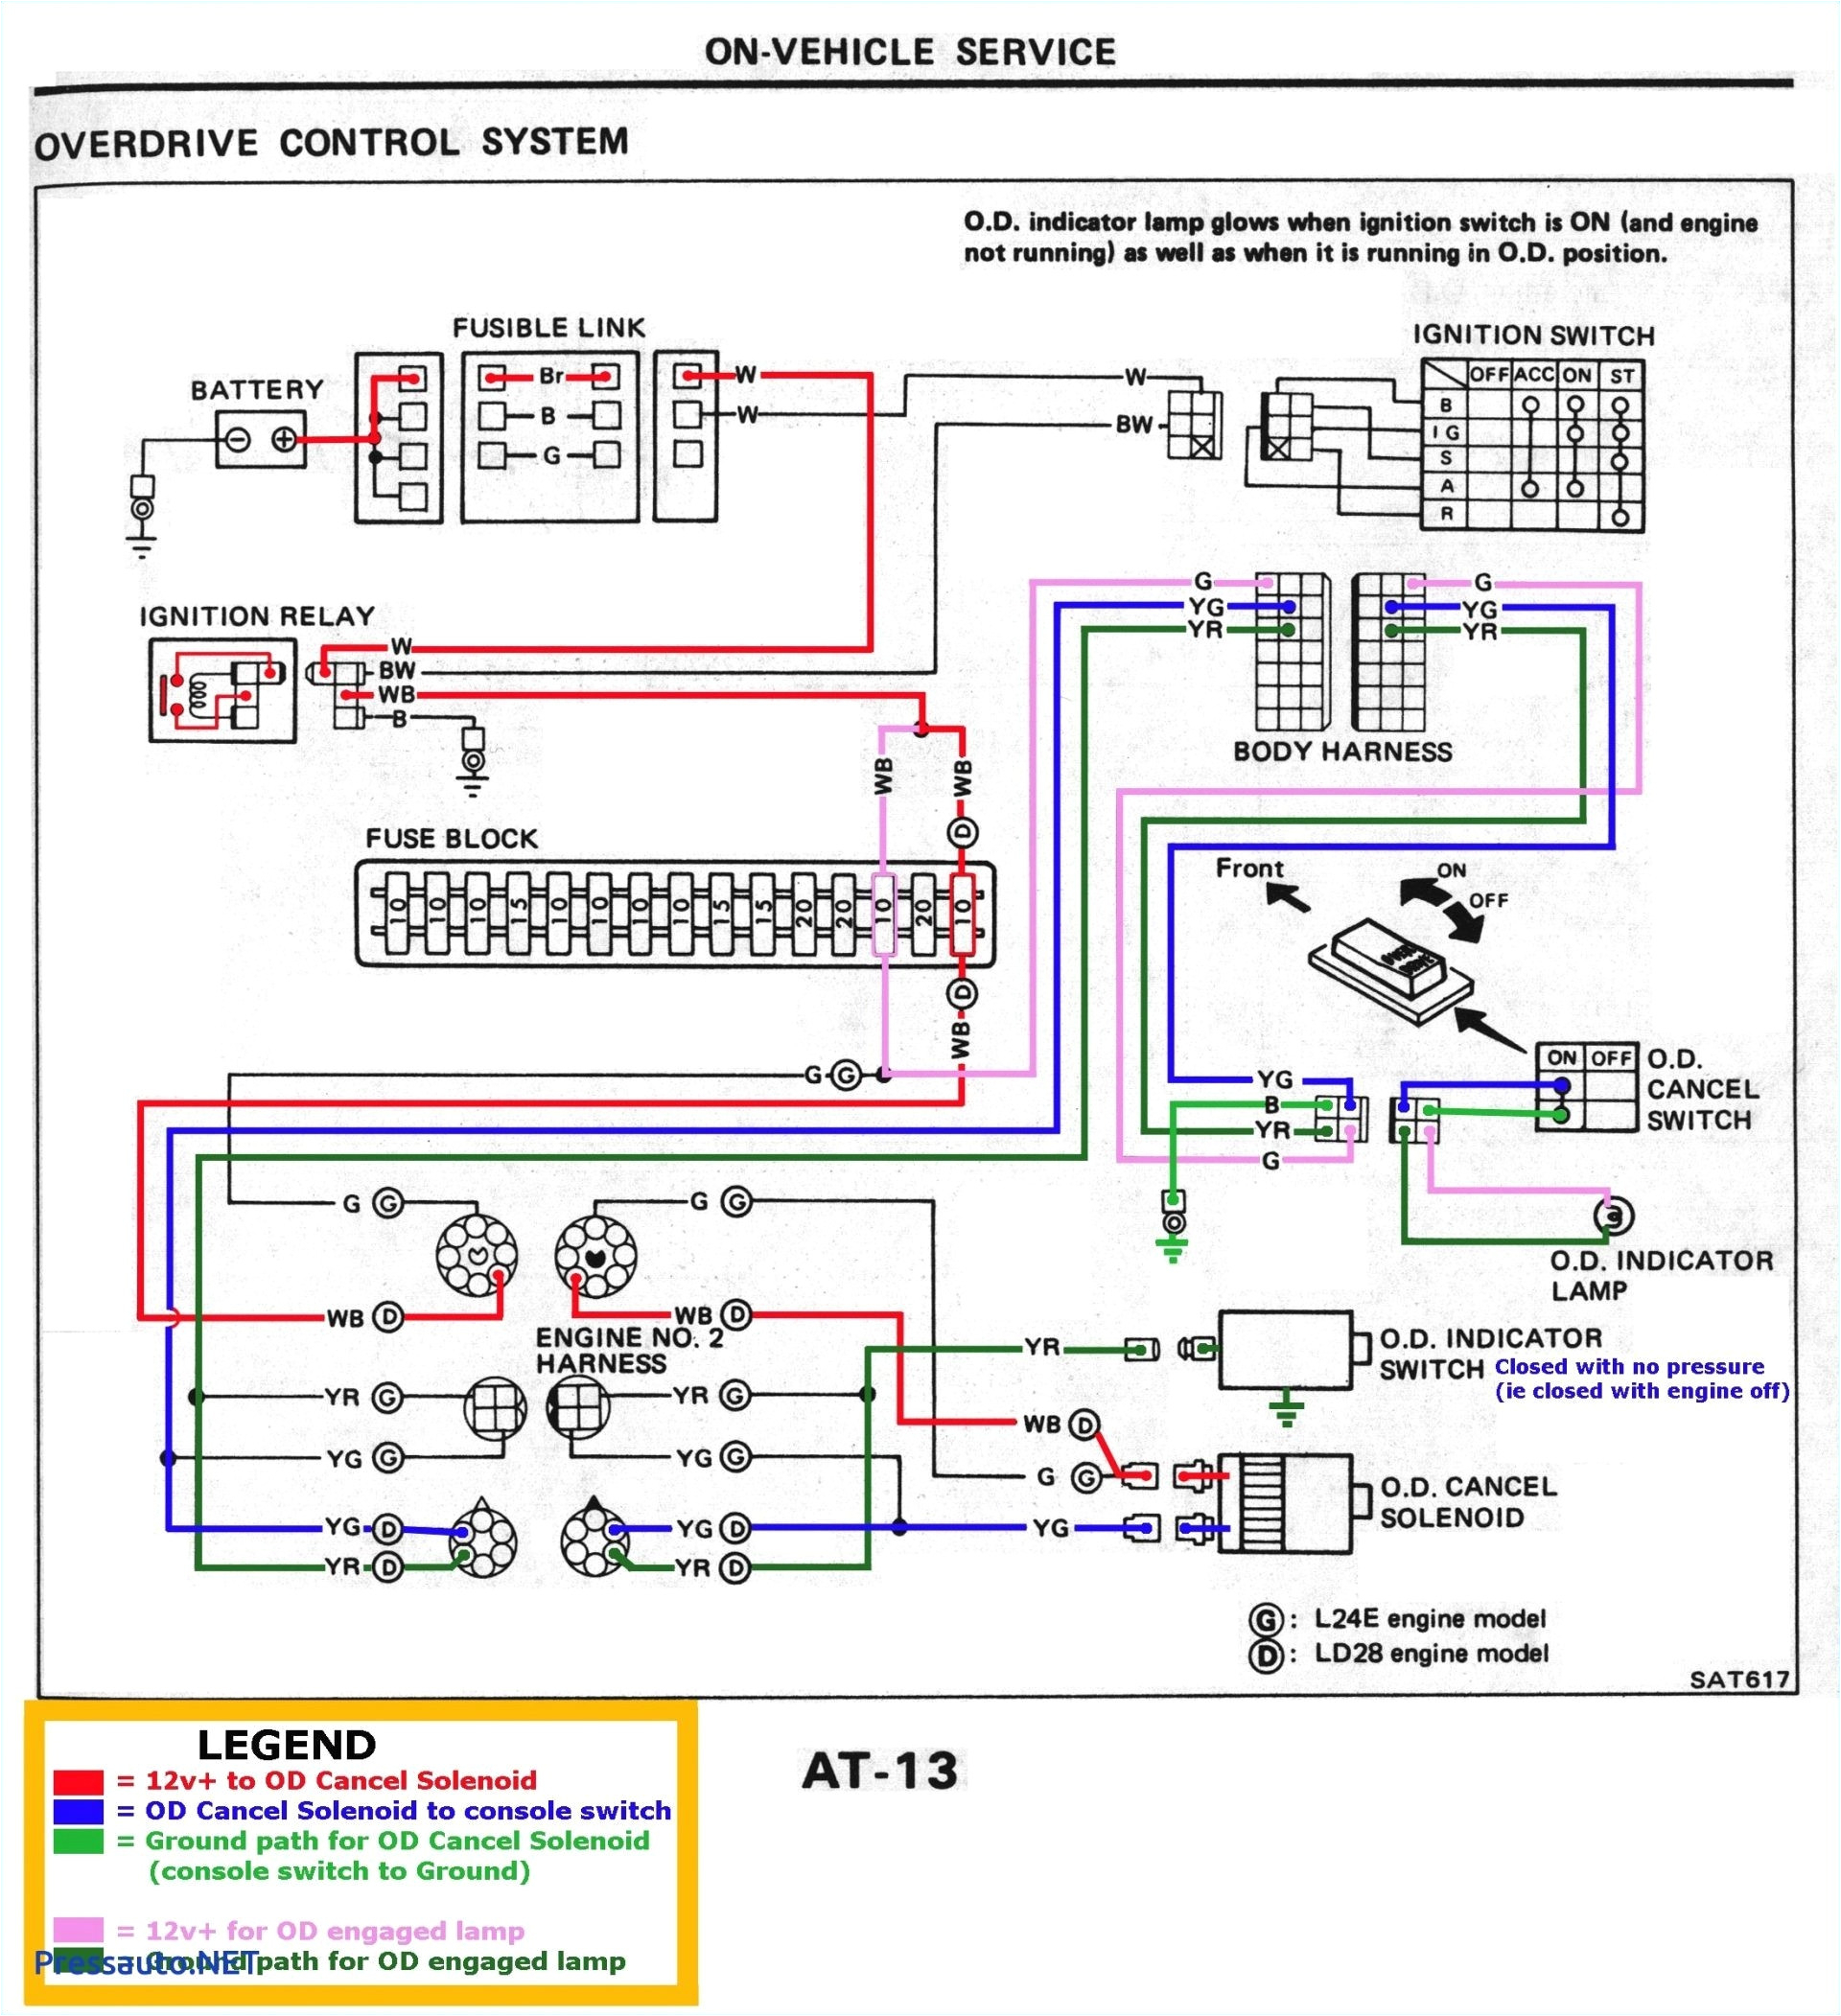 power acoustik pd 710 wiring diagram best of chevy 350 alternator wiring diagram download